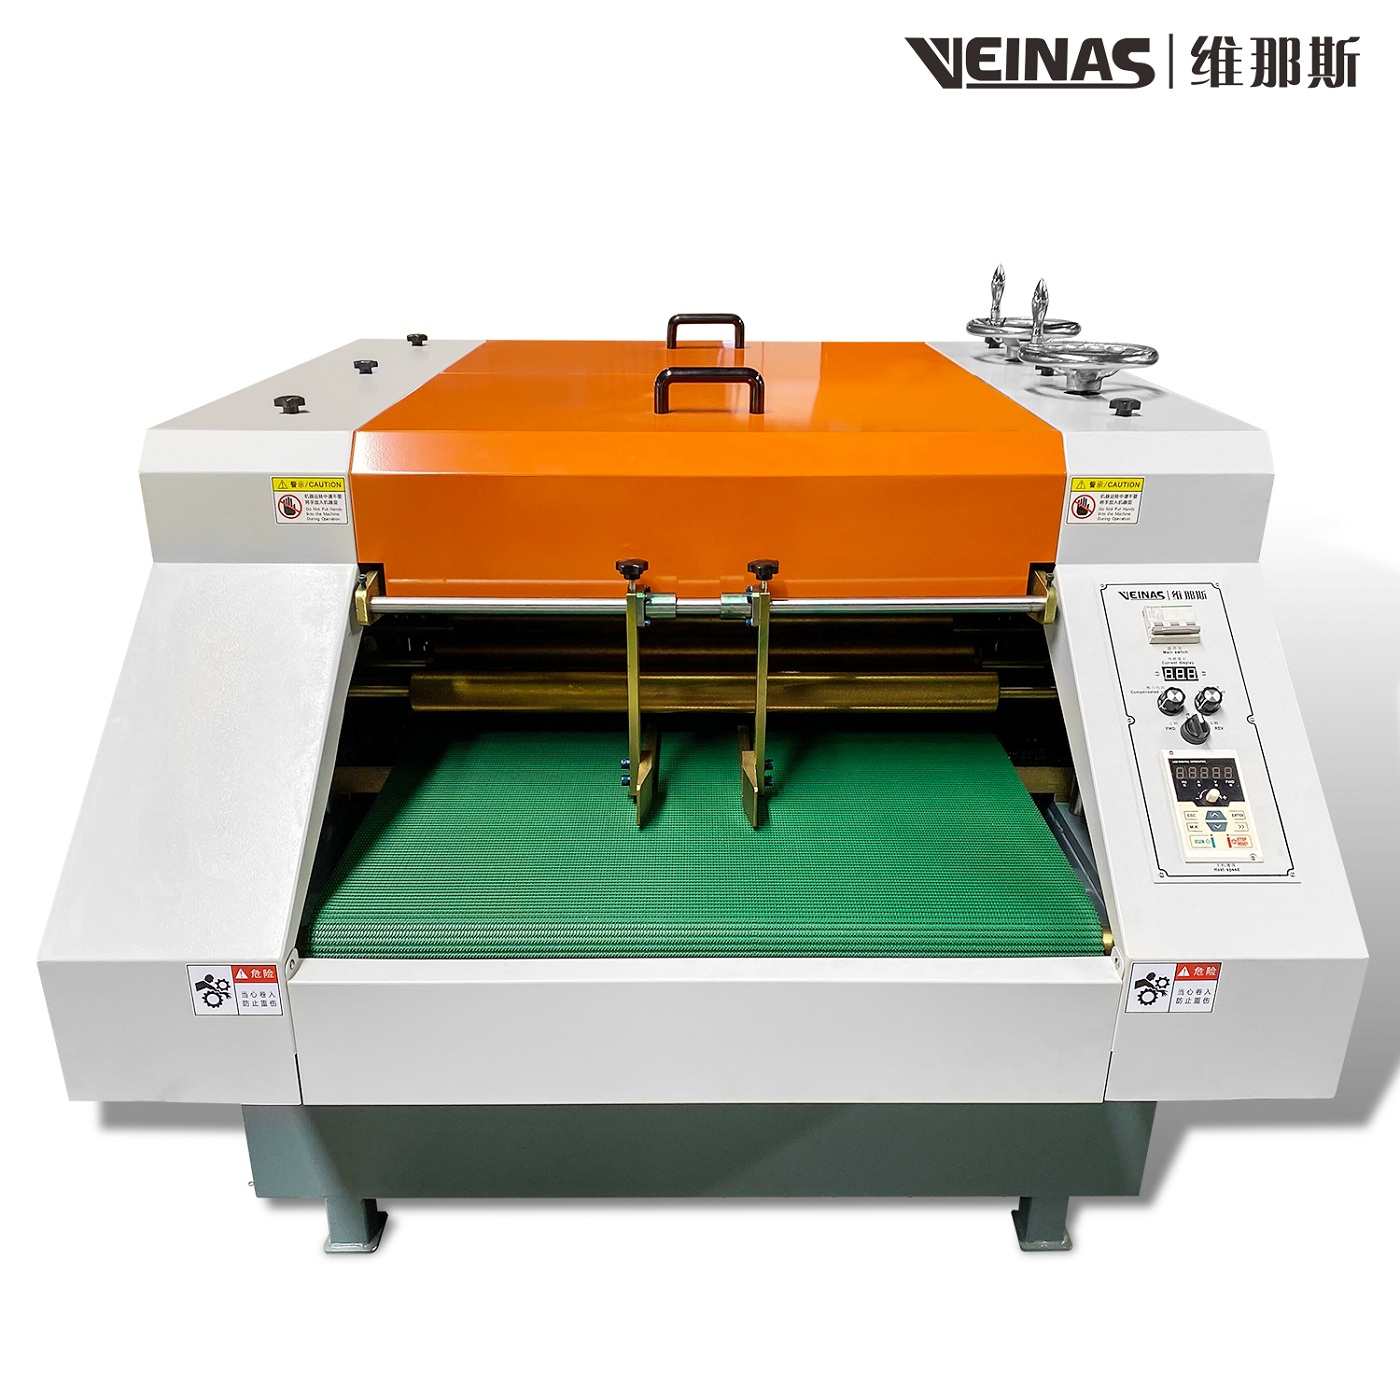 Veinas framing custom built machinery supply for workshop